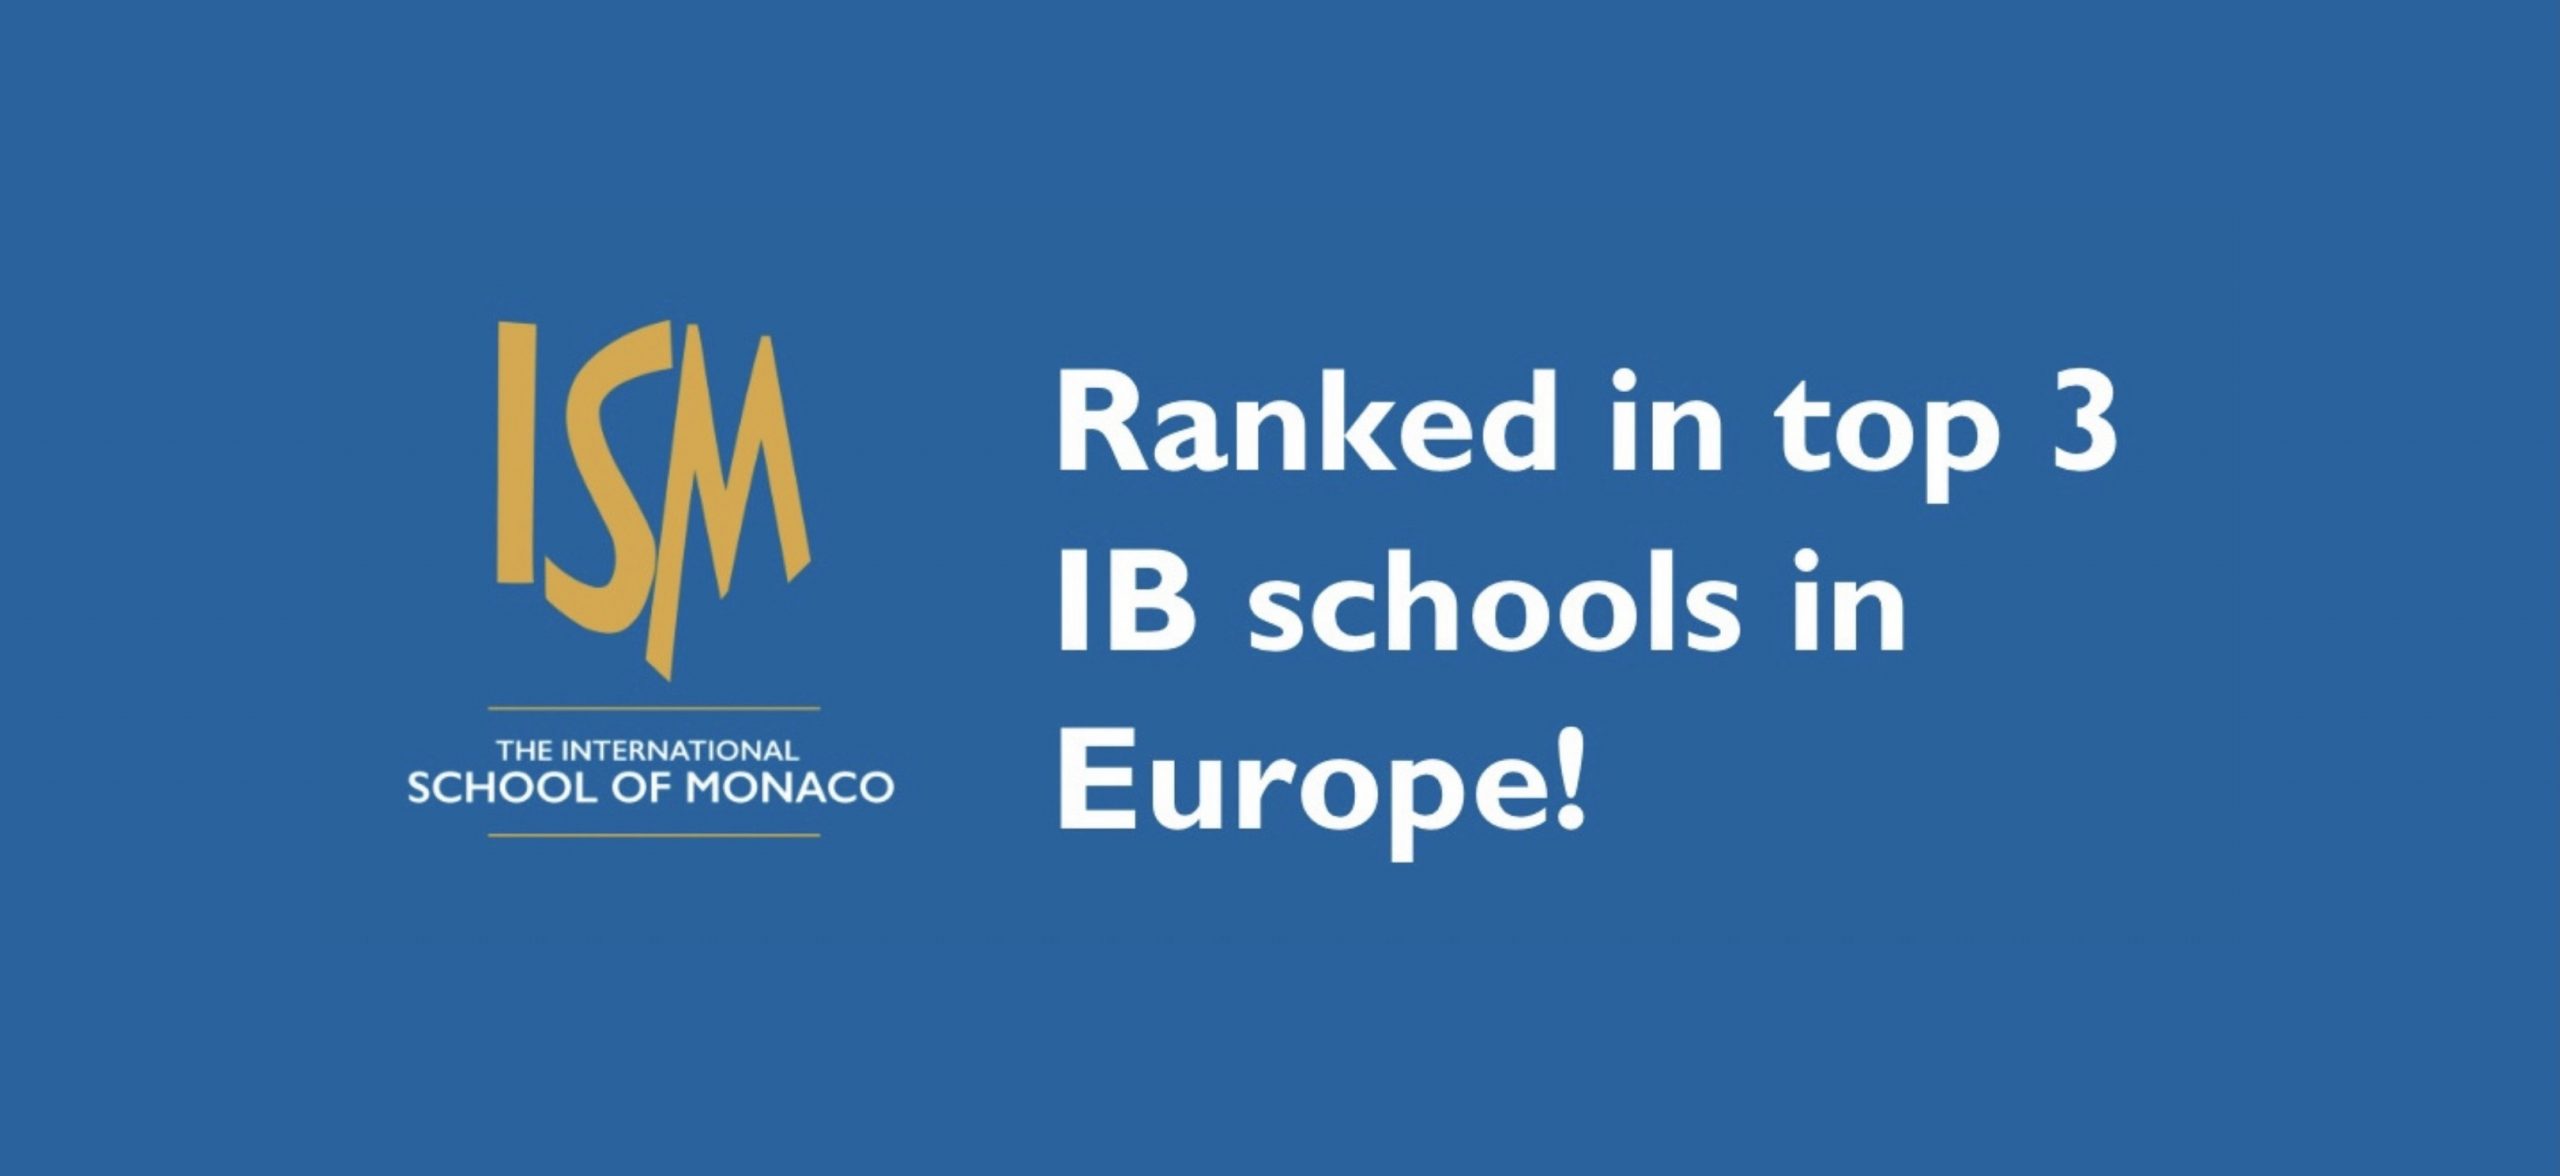 ISM ranked in top 3 IB schools in Europe Image